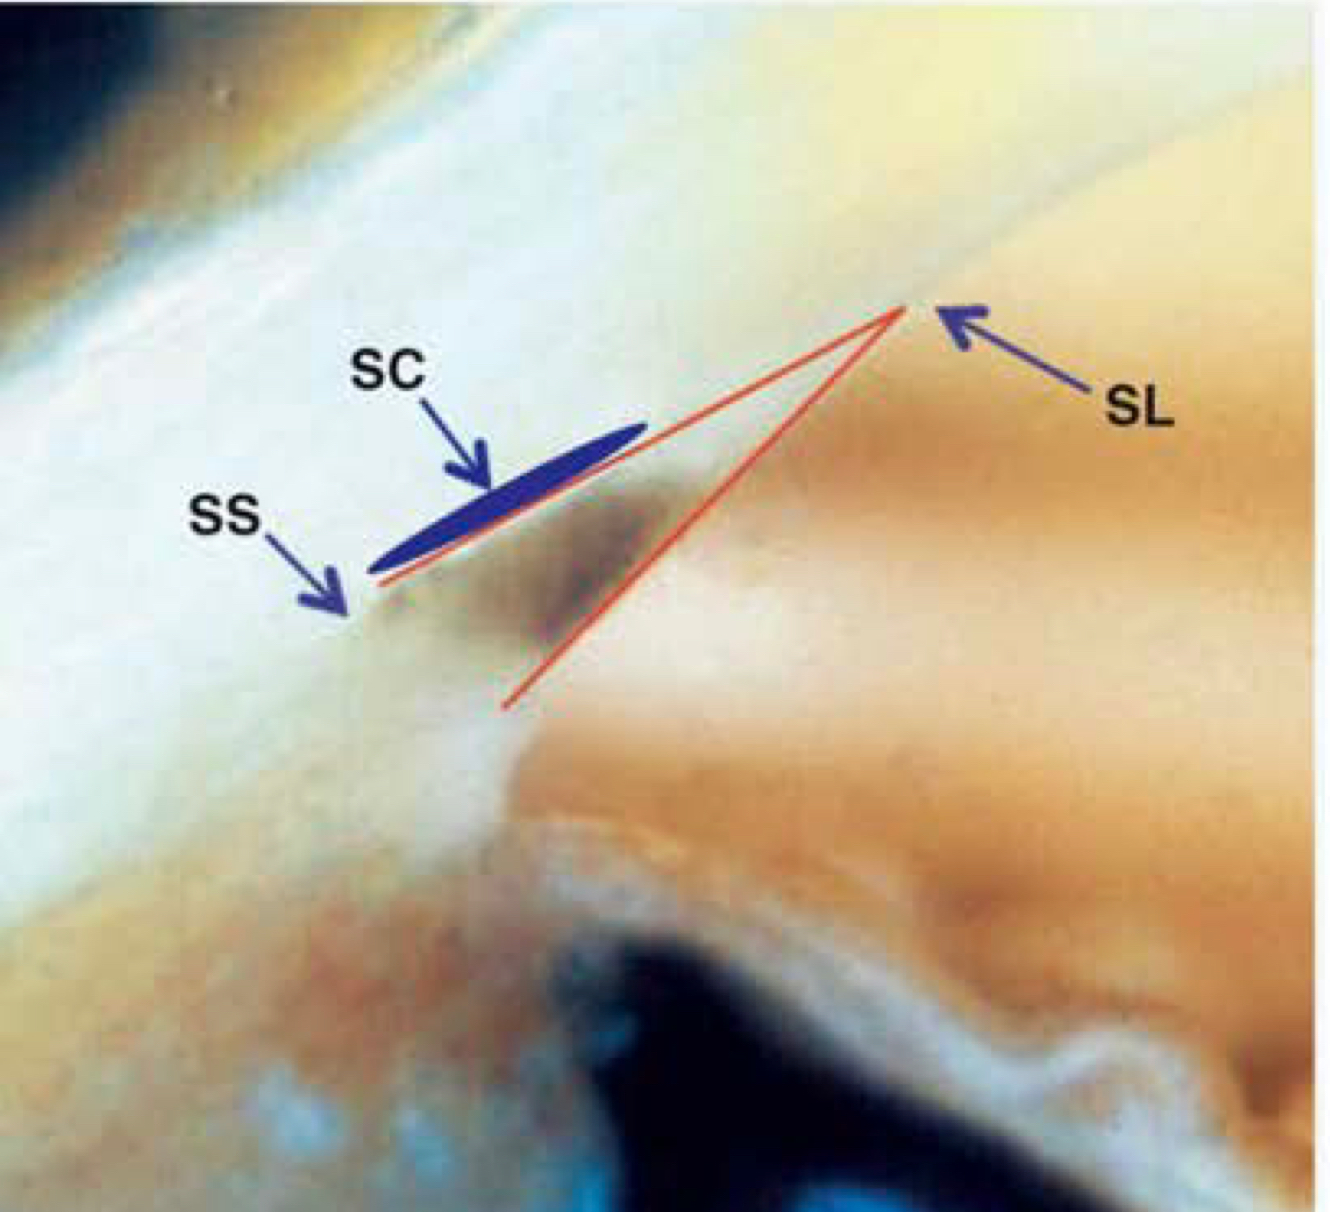 <p>SC- schlemm’s canal SS- scleral spur SL- schwalbe’s line (edge of descemet’s membrane)</p>